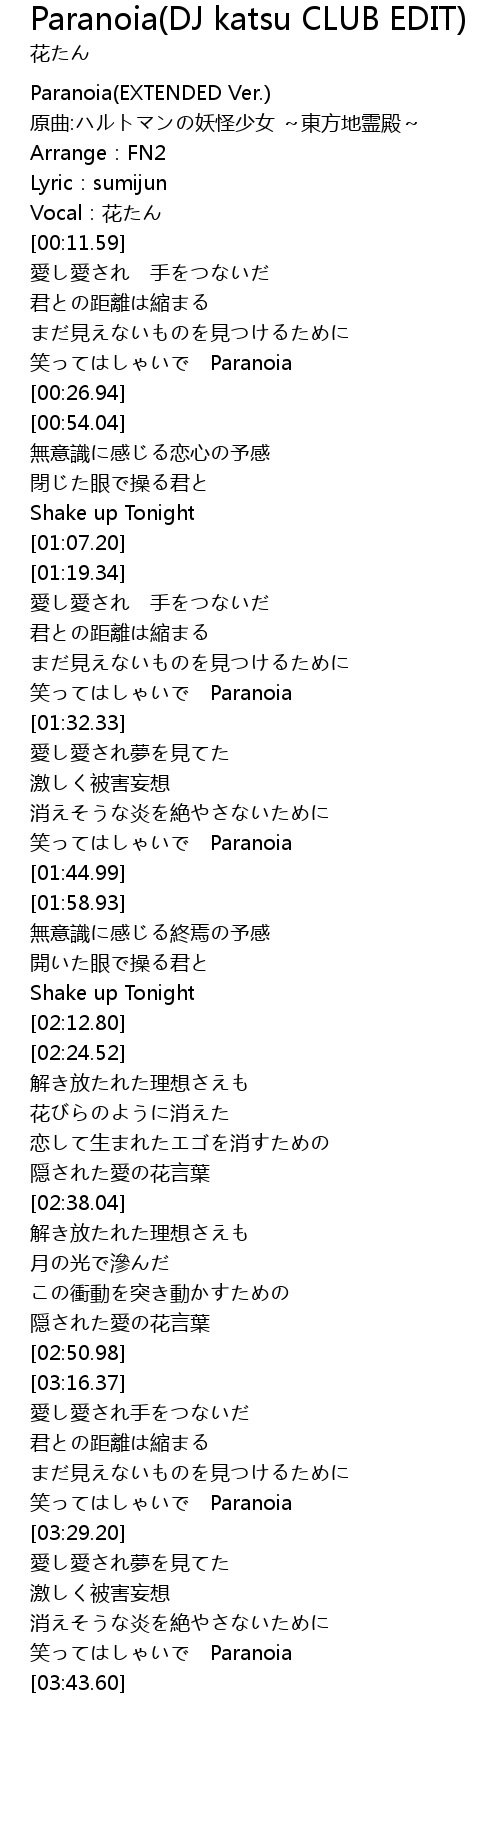 Paranoia Dj Katsu Club Edit Lyrics Follow Lyrics